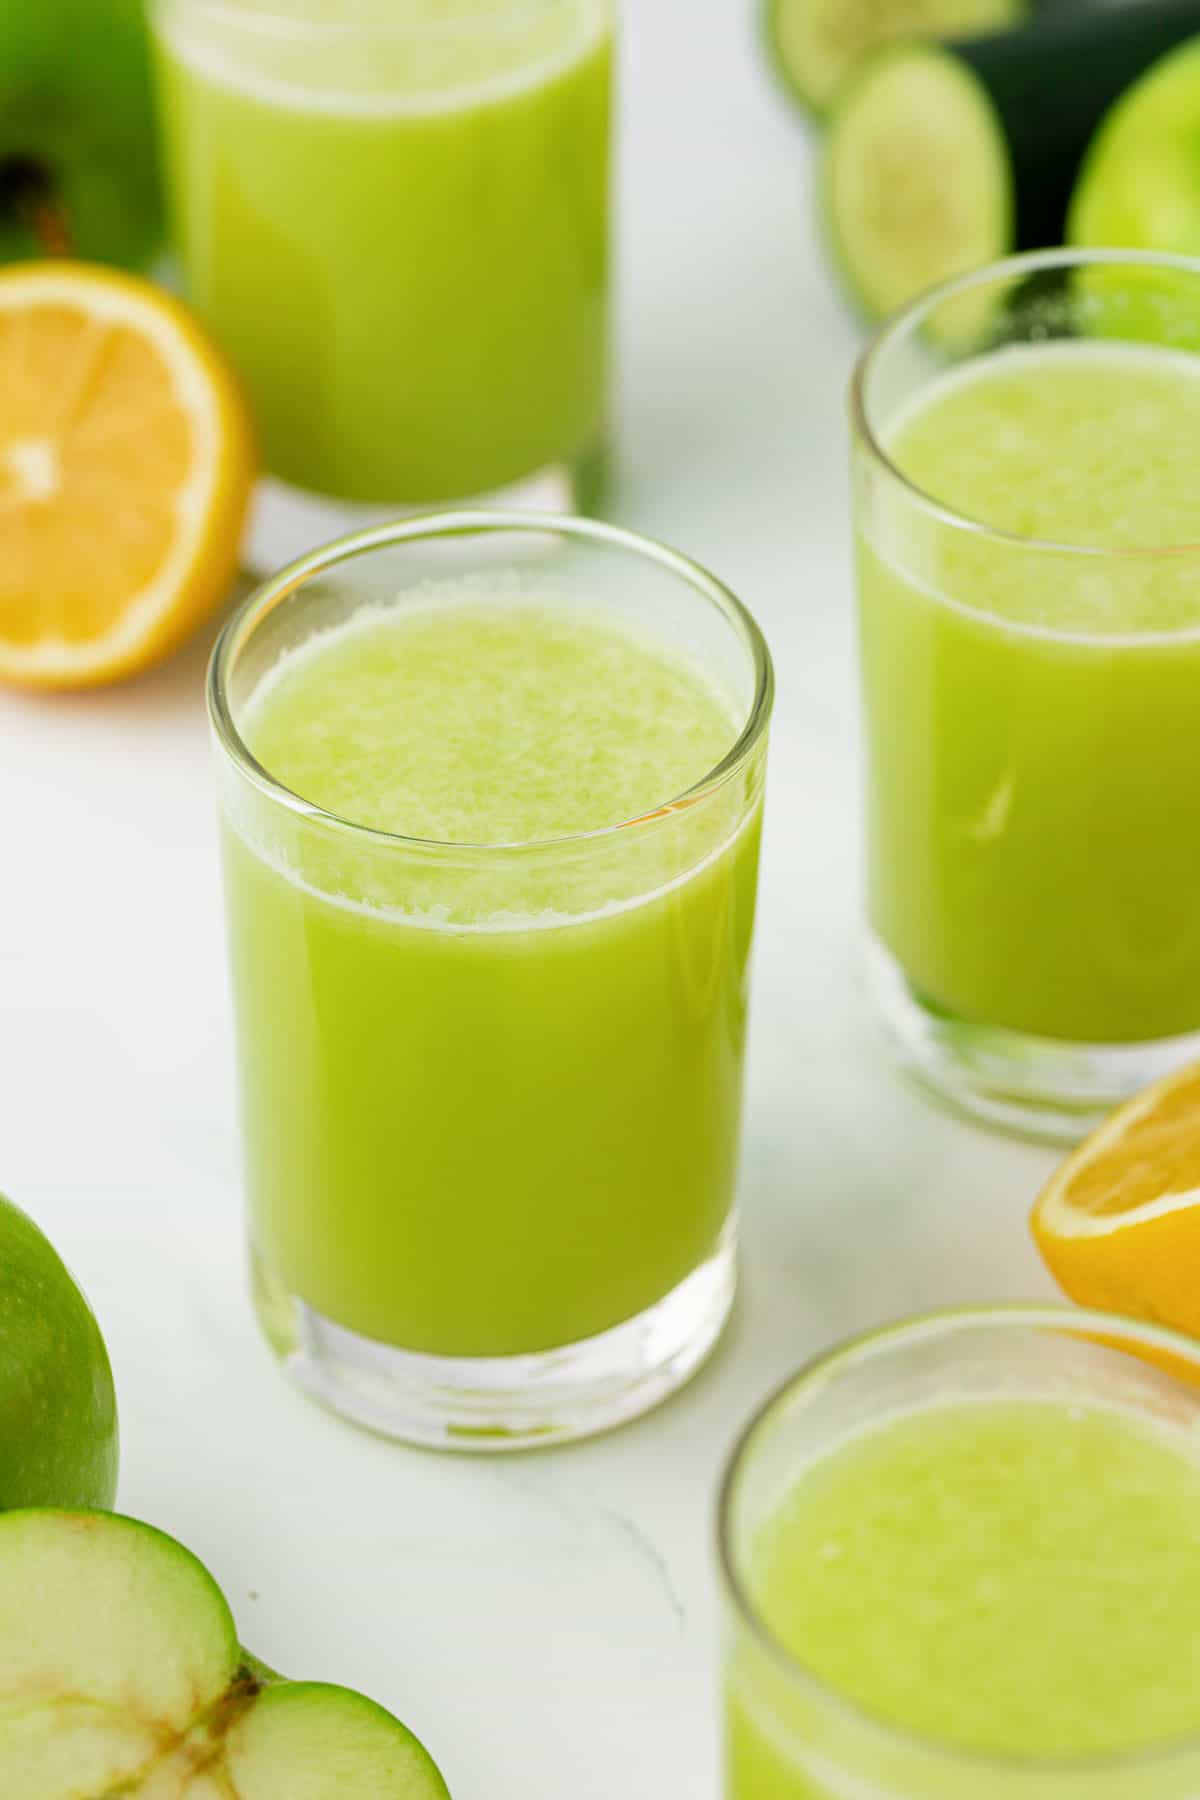 green apple juice in a glass